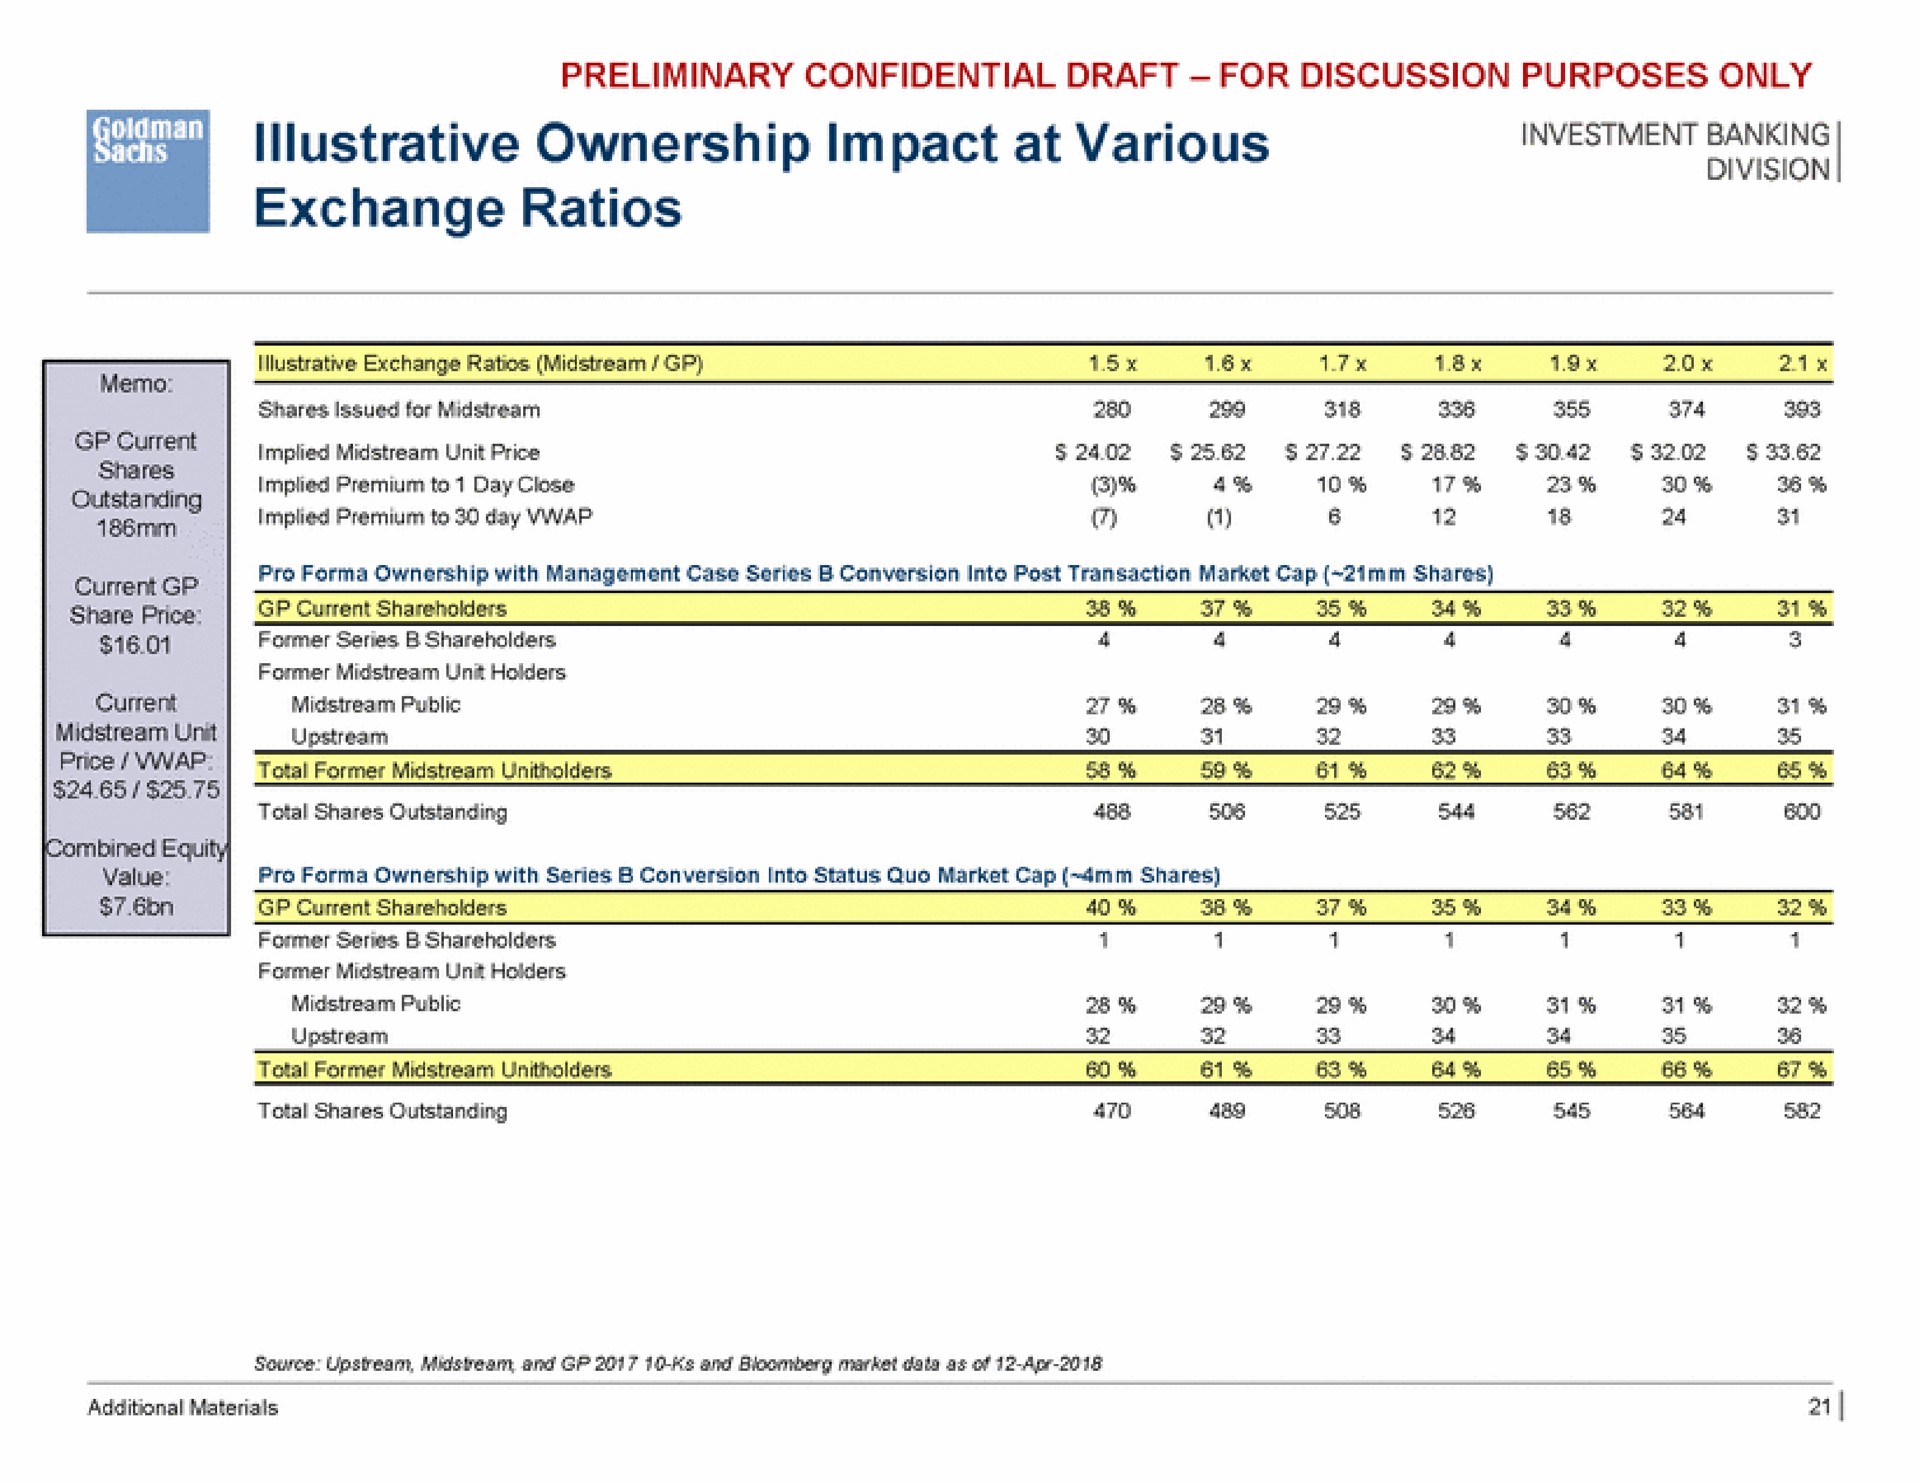 vision illustrative ownership impact at various exchange ratios | Goldman Sachs